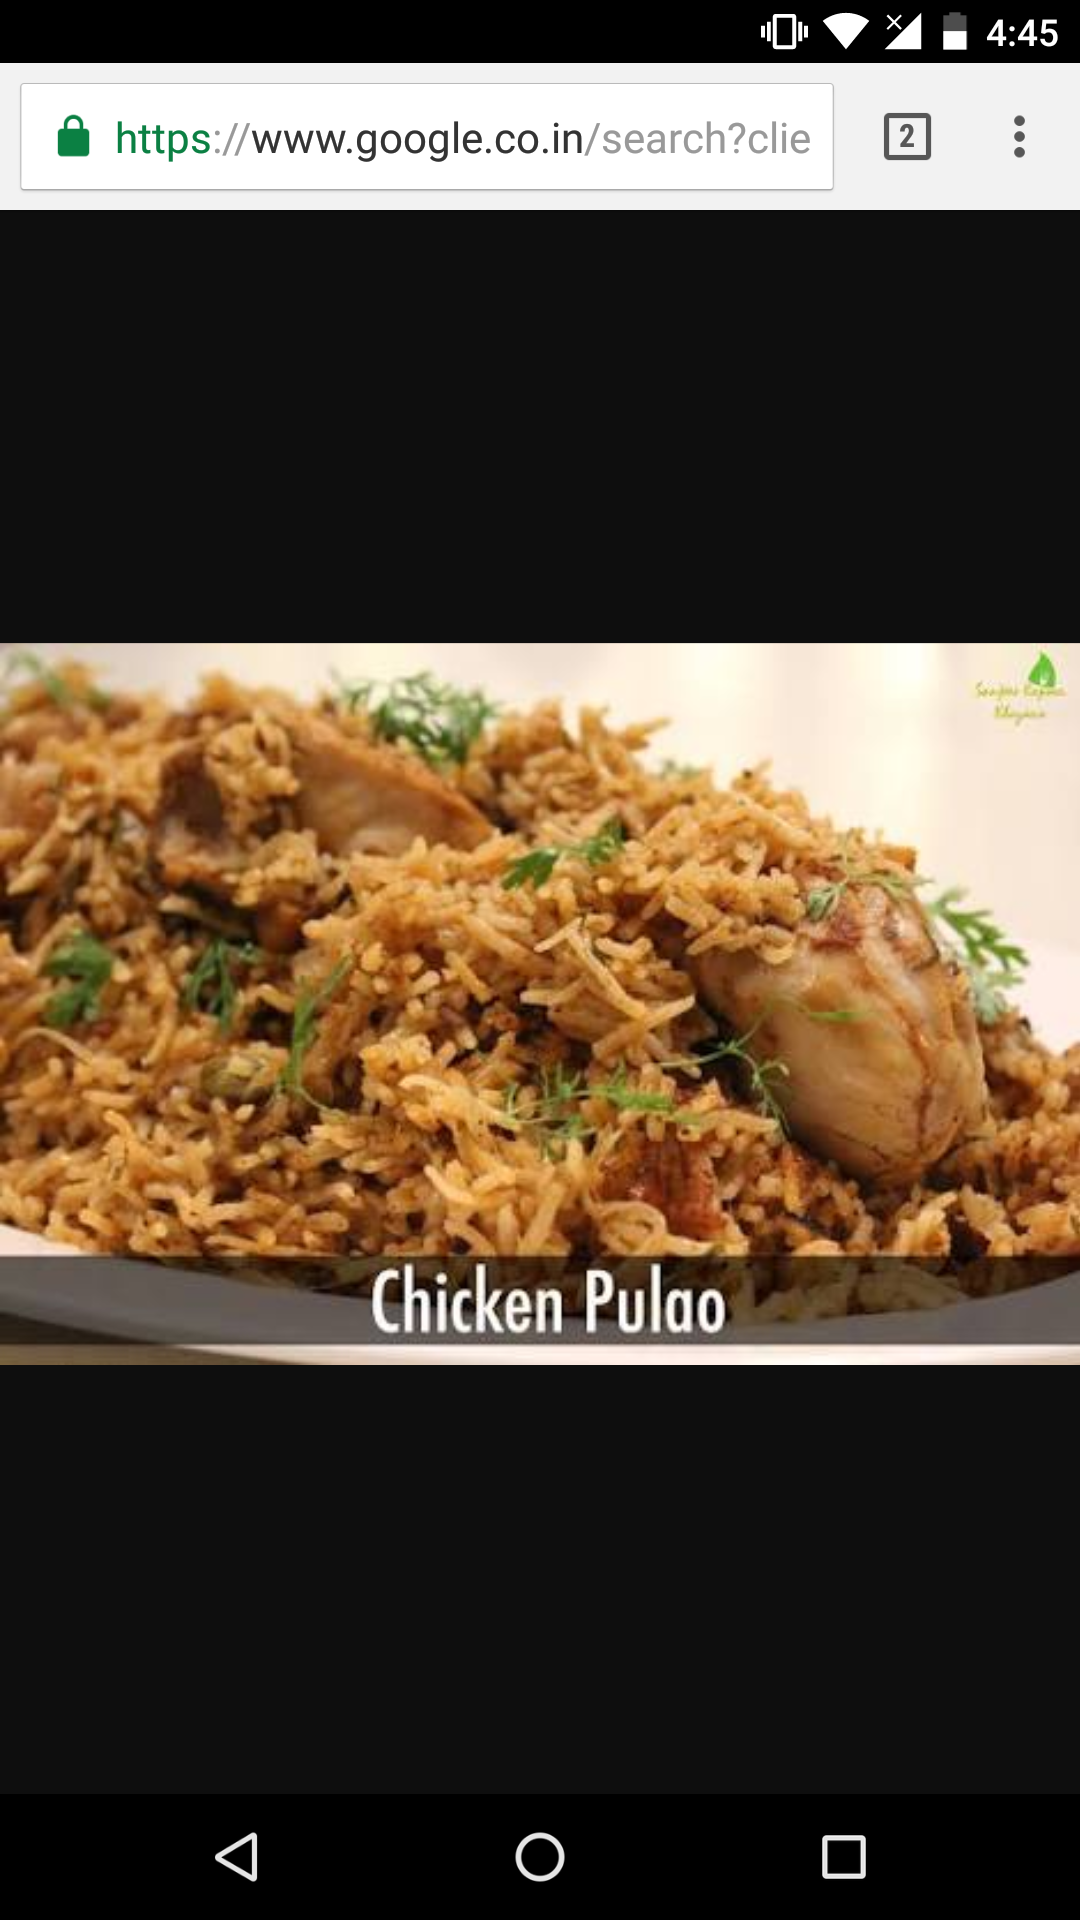 Chicken pulao